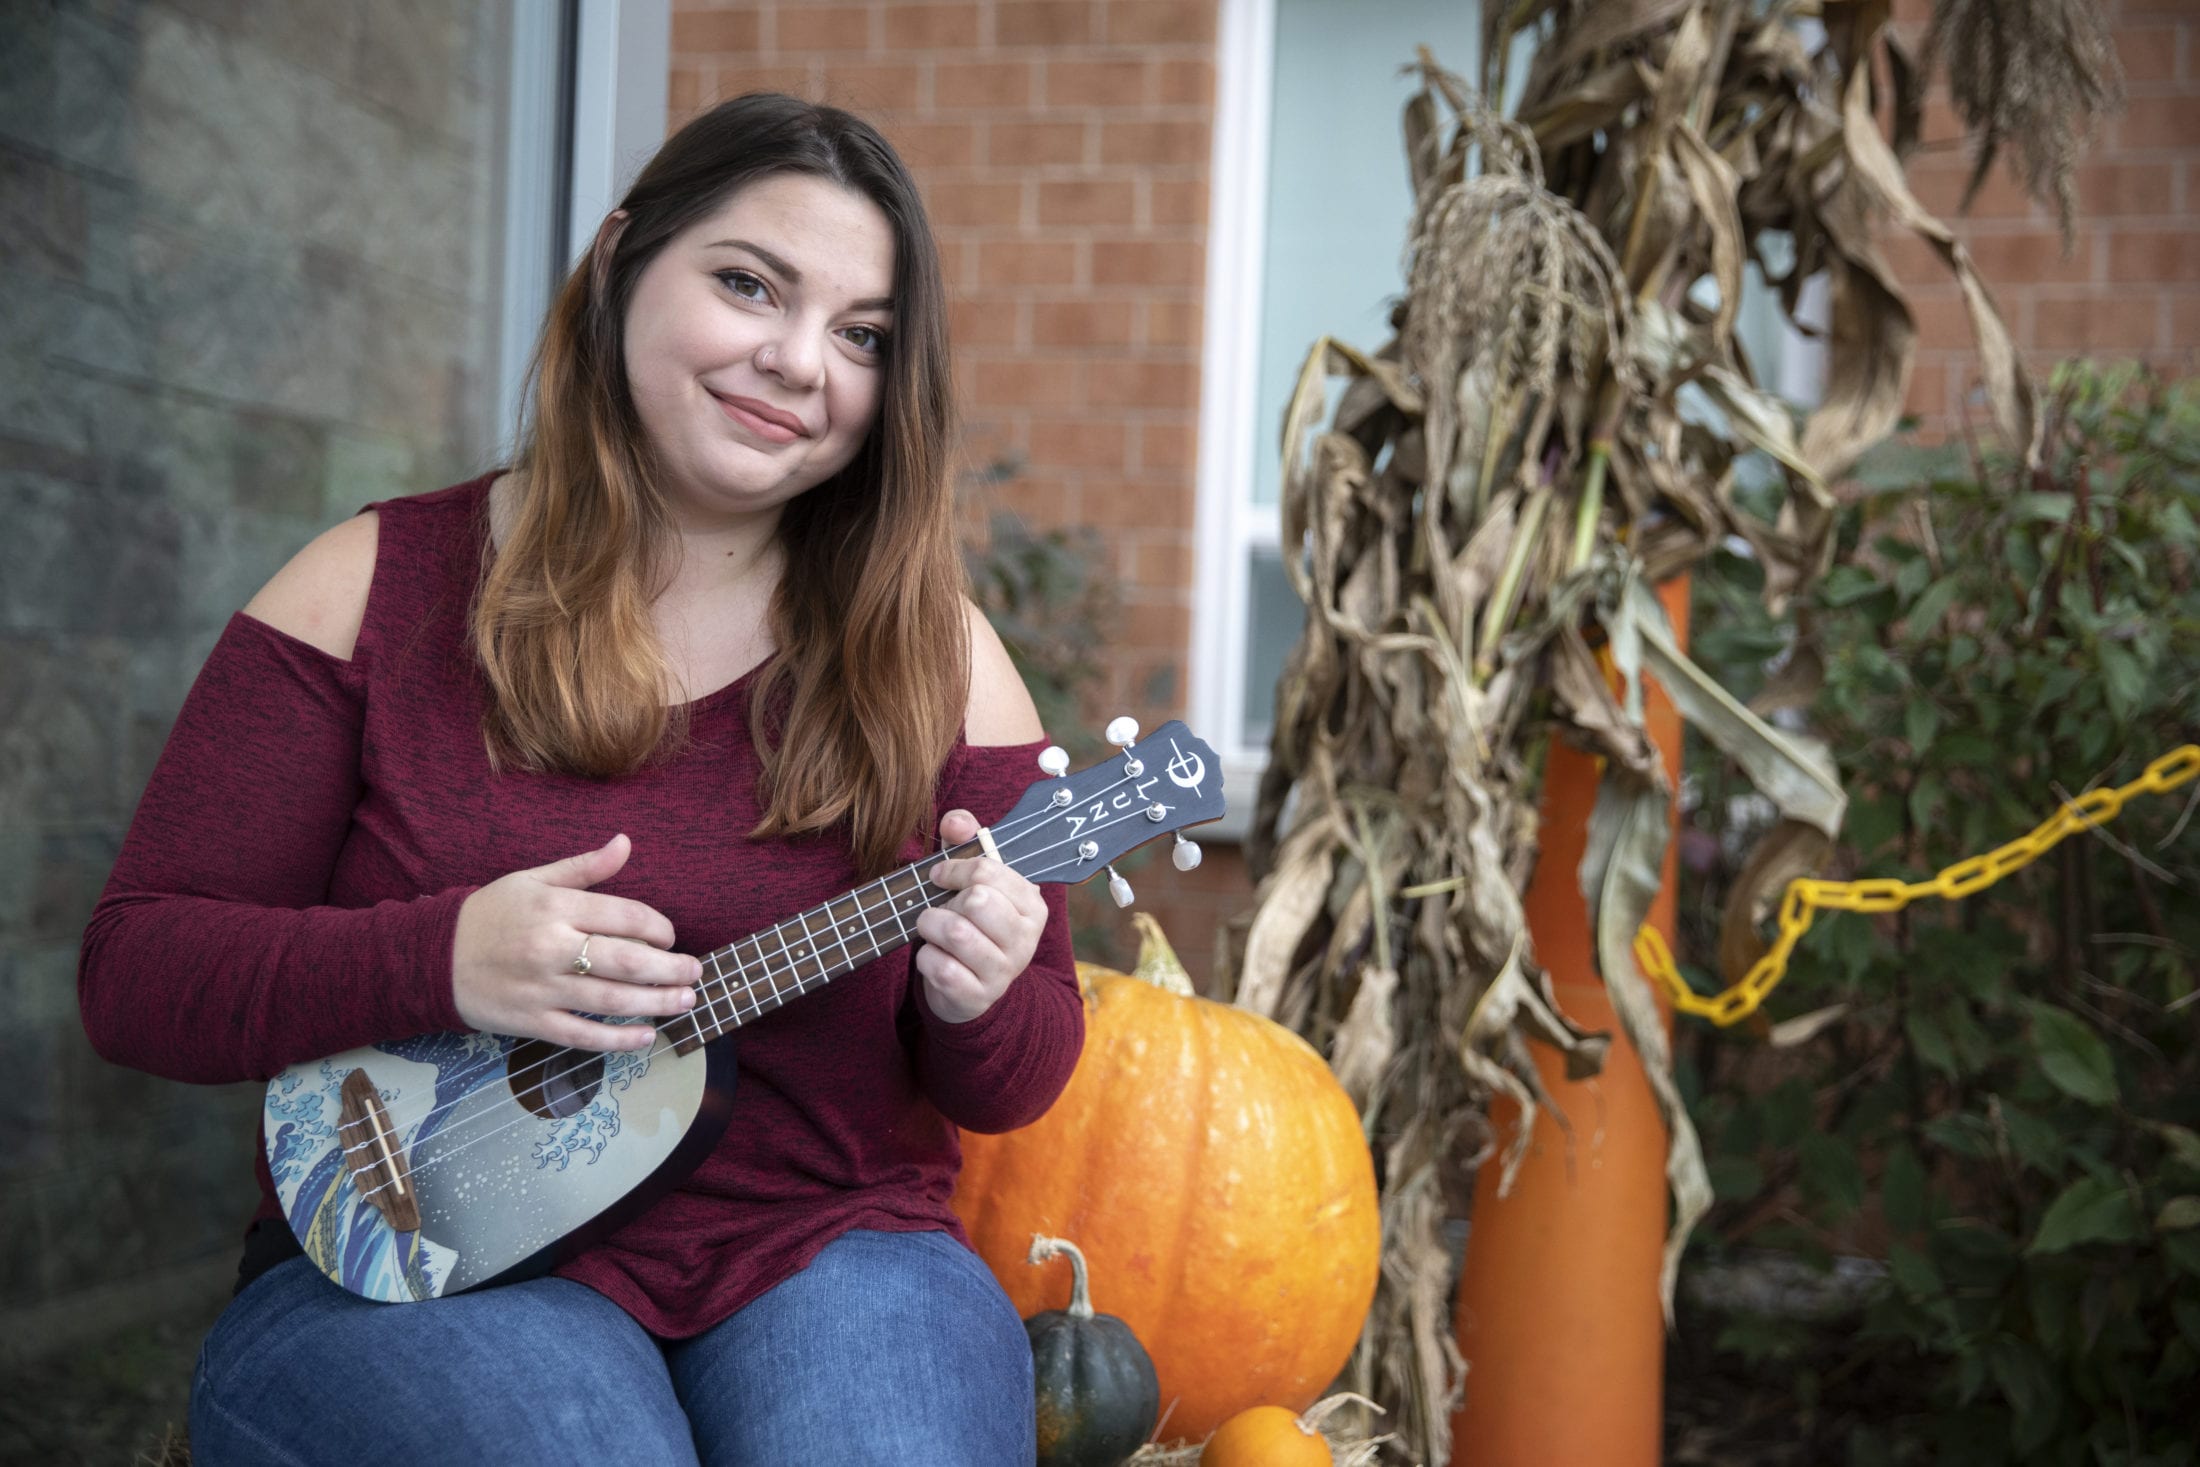 Musician, leader, future teacher: Victoria strikes a chord at SUNY Broome